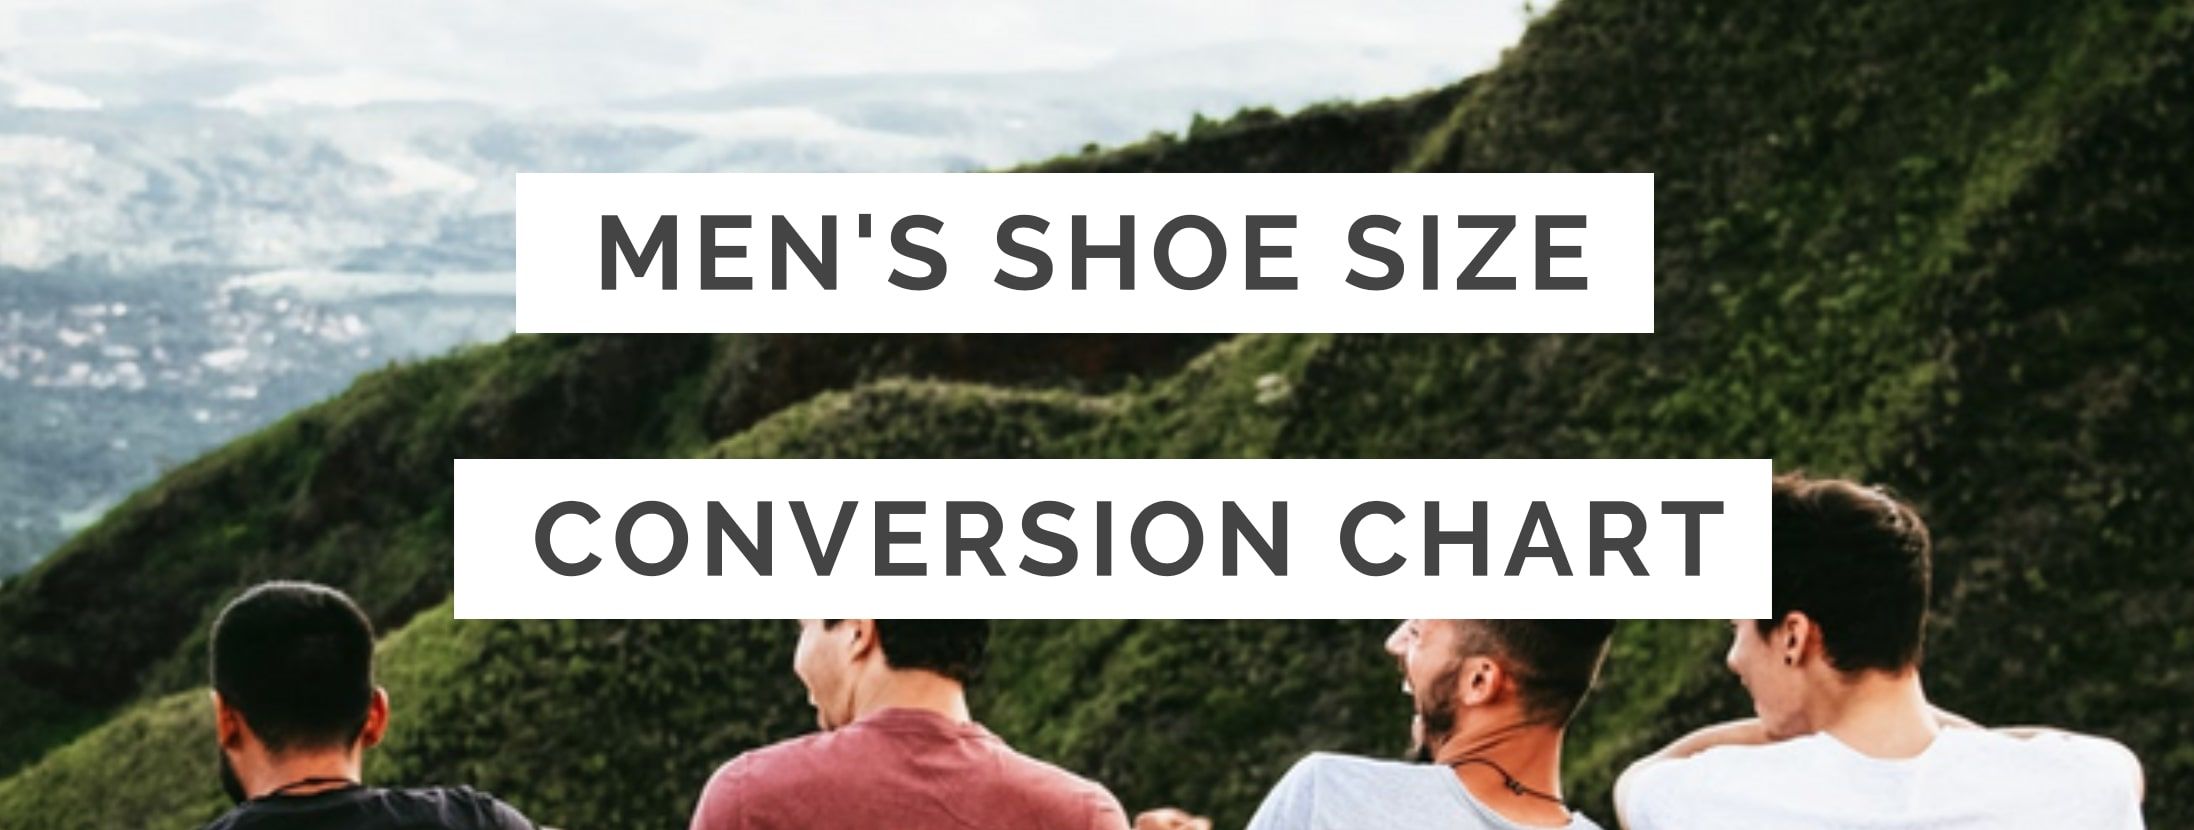 shoe size conversion aus to eu